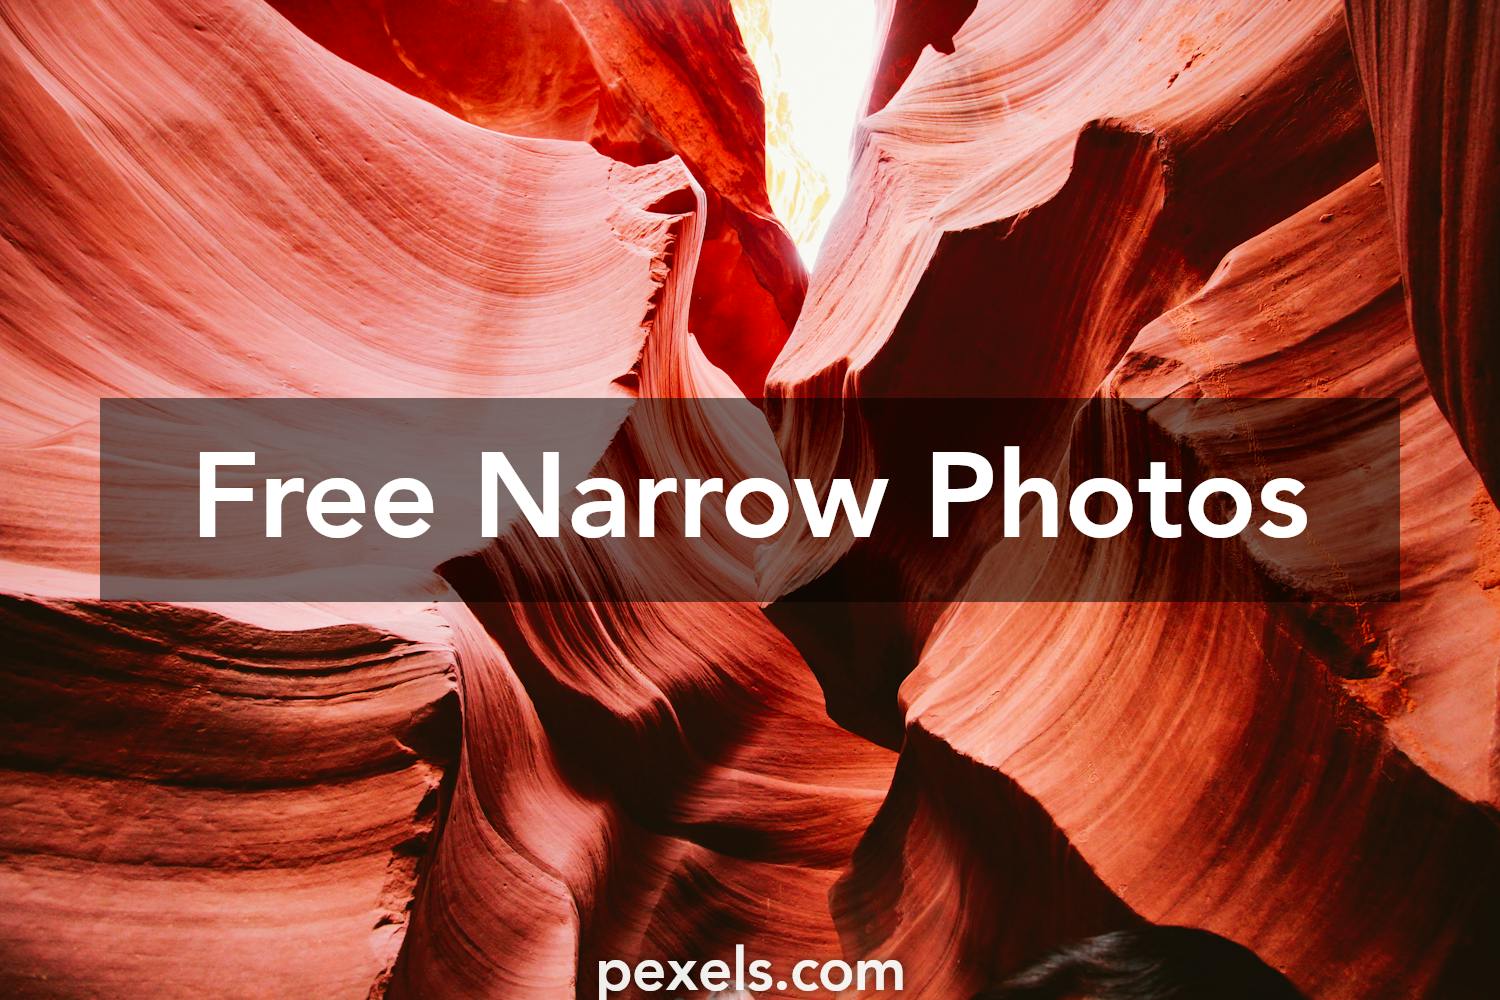 Free stock photos of narrow · Pexels